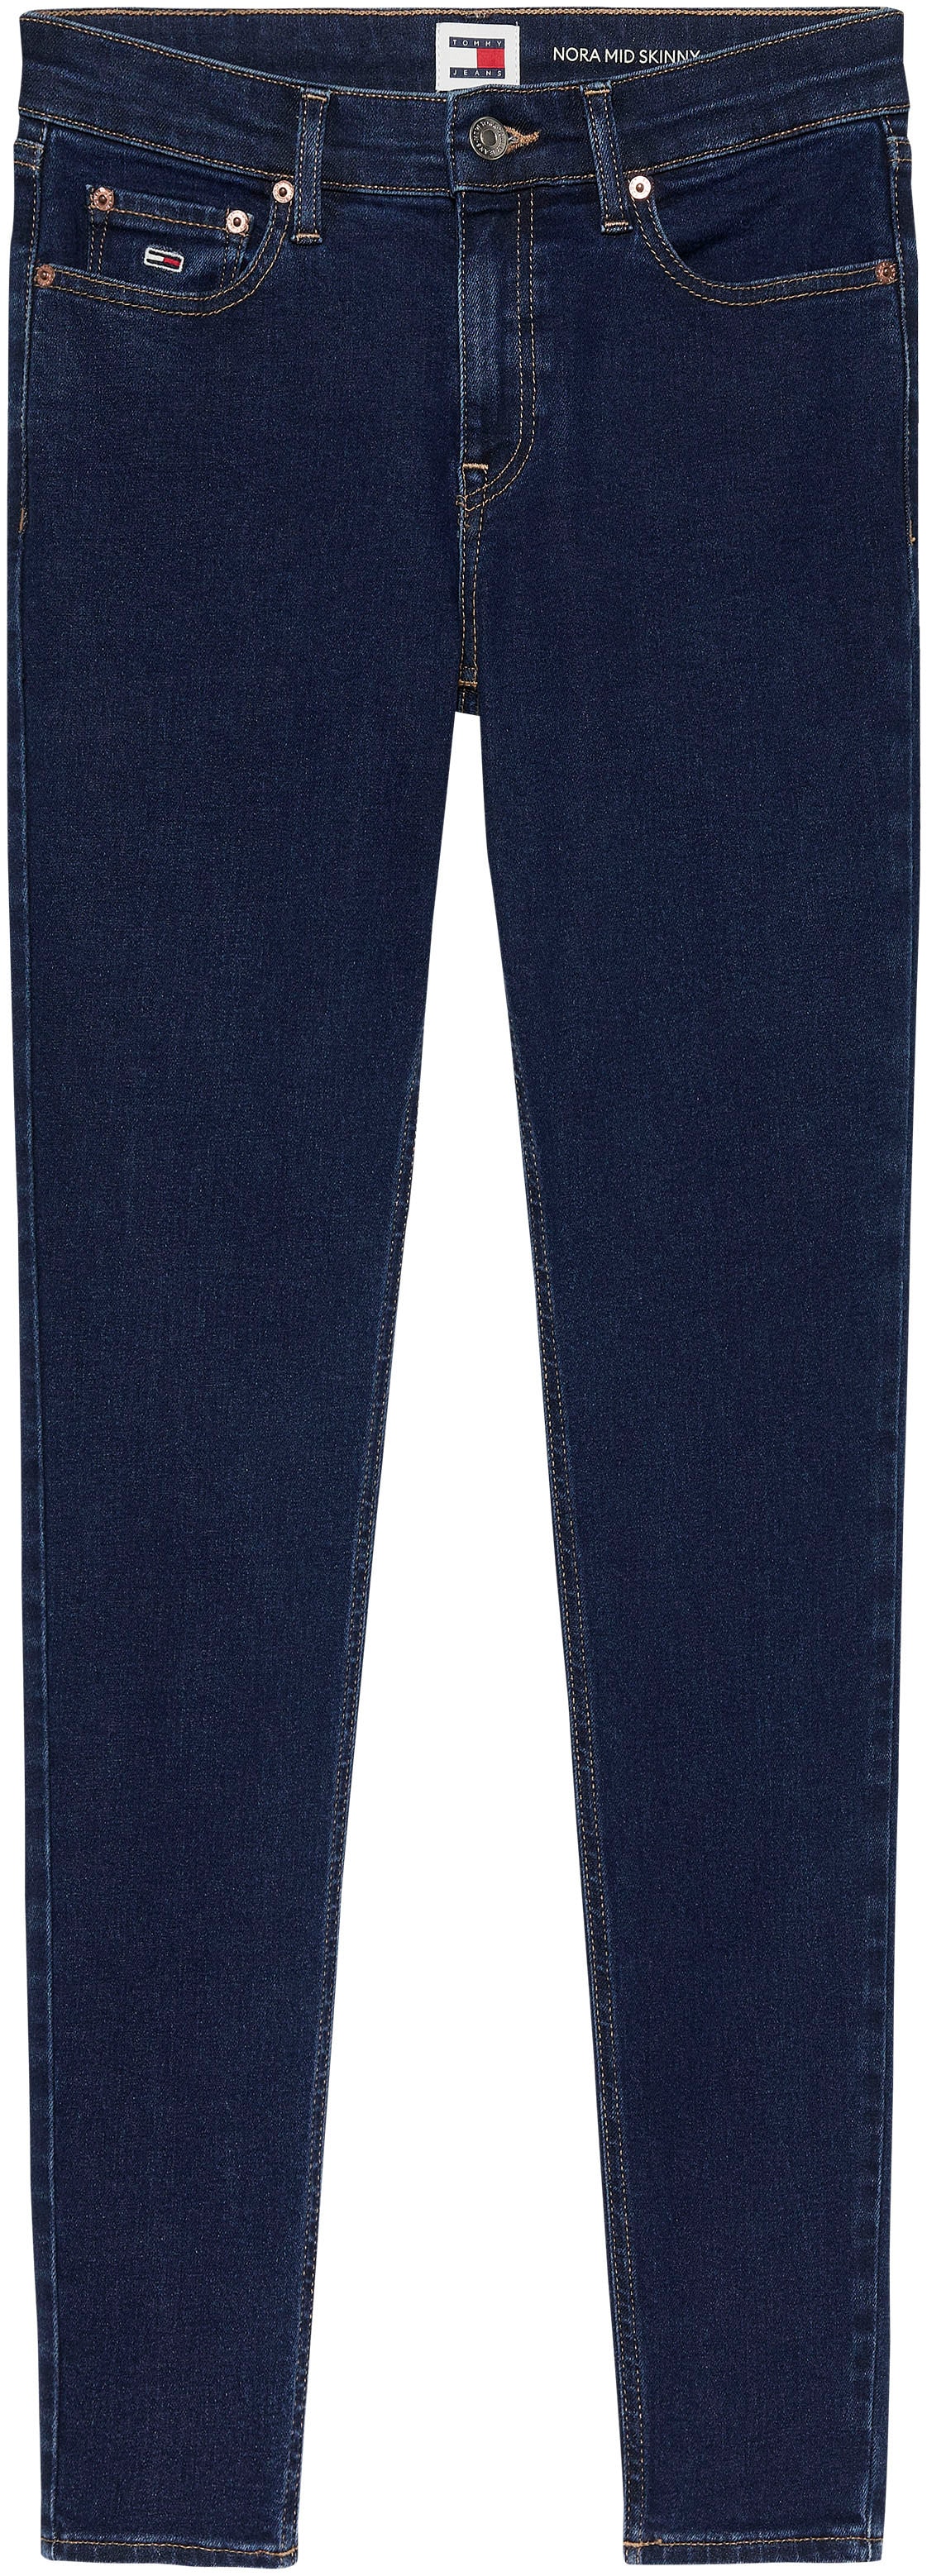 ♕ Tommy Logostickerei bei mit und Logobadge Skinny-fit-Jeans, Jeans